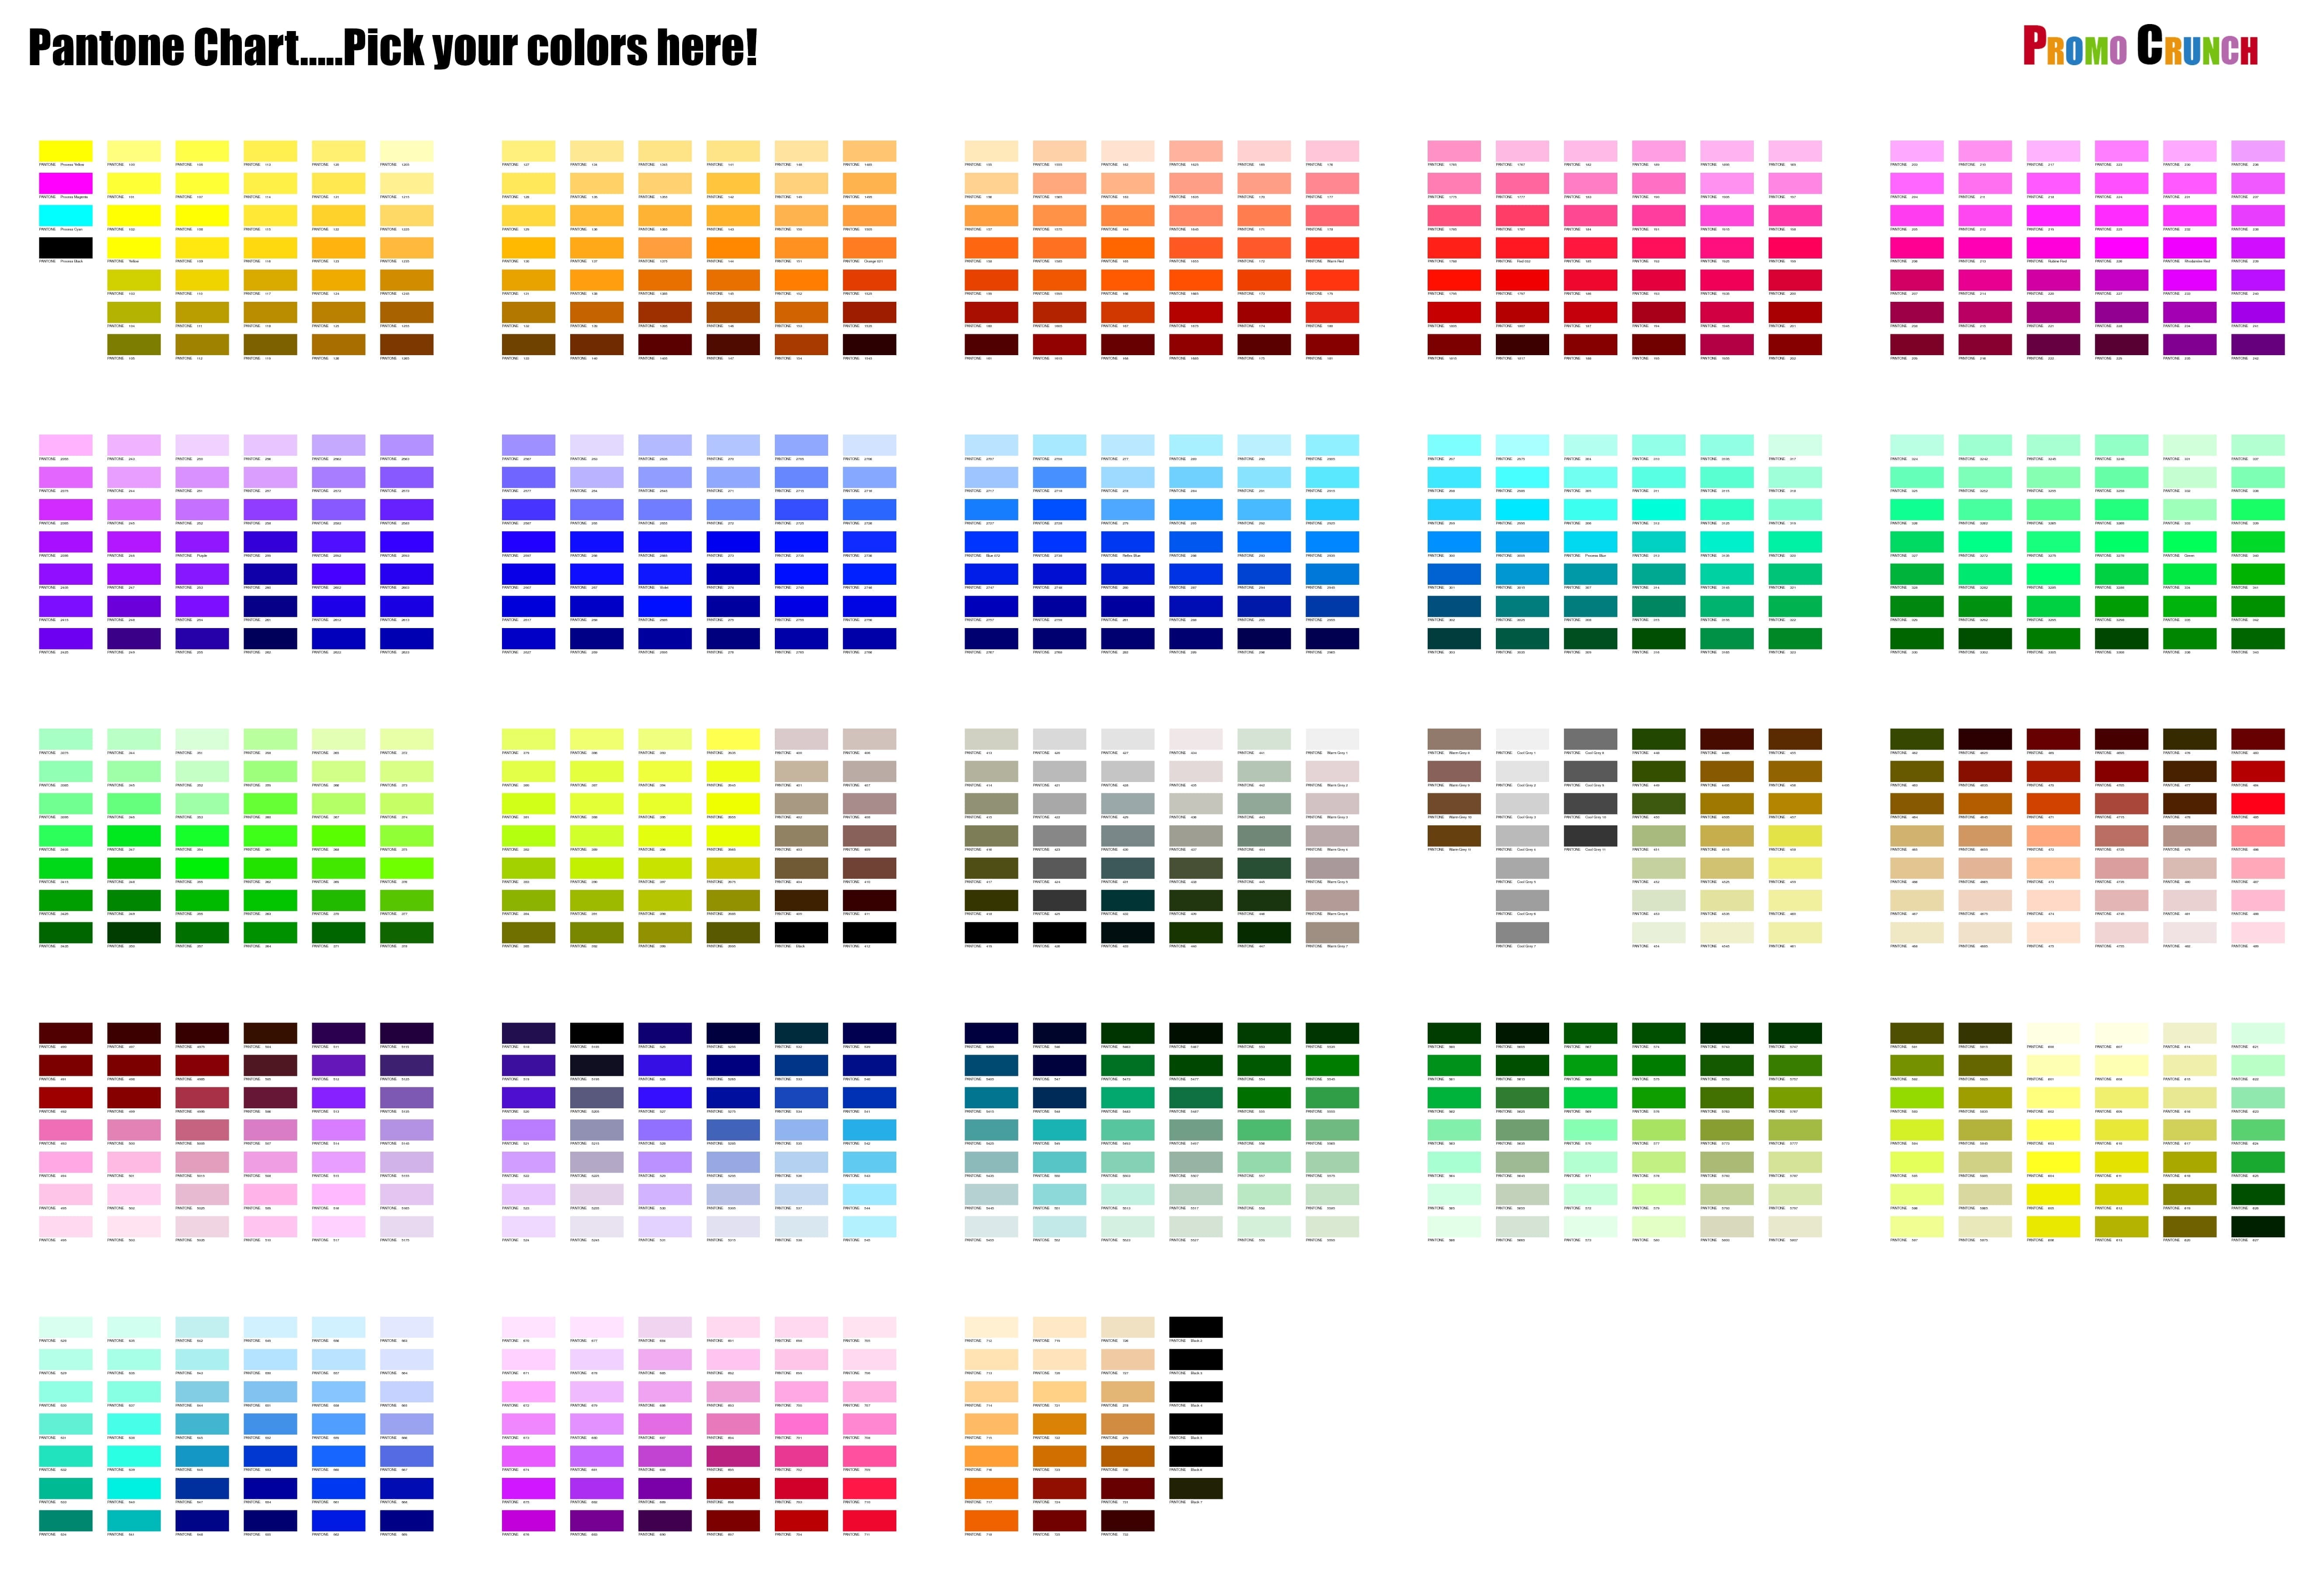 Pantone Color Chart Promo Crunch Worlds Best Custom Flash Drives